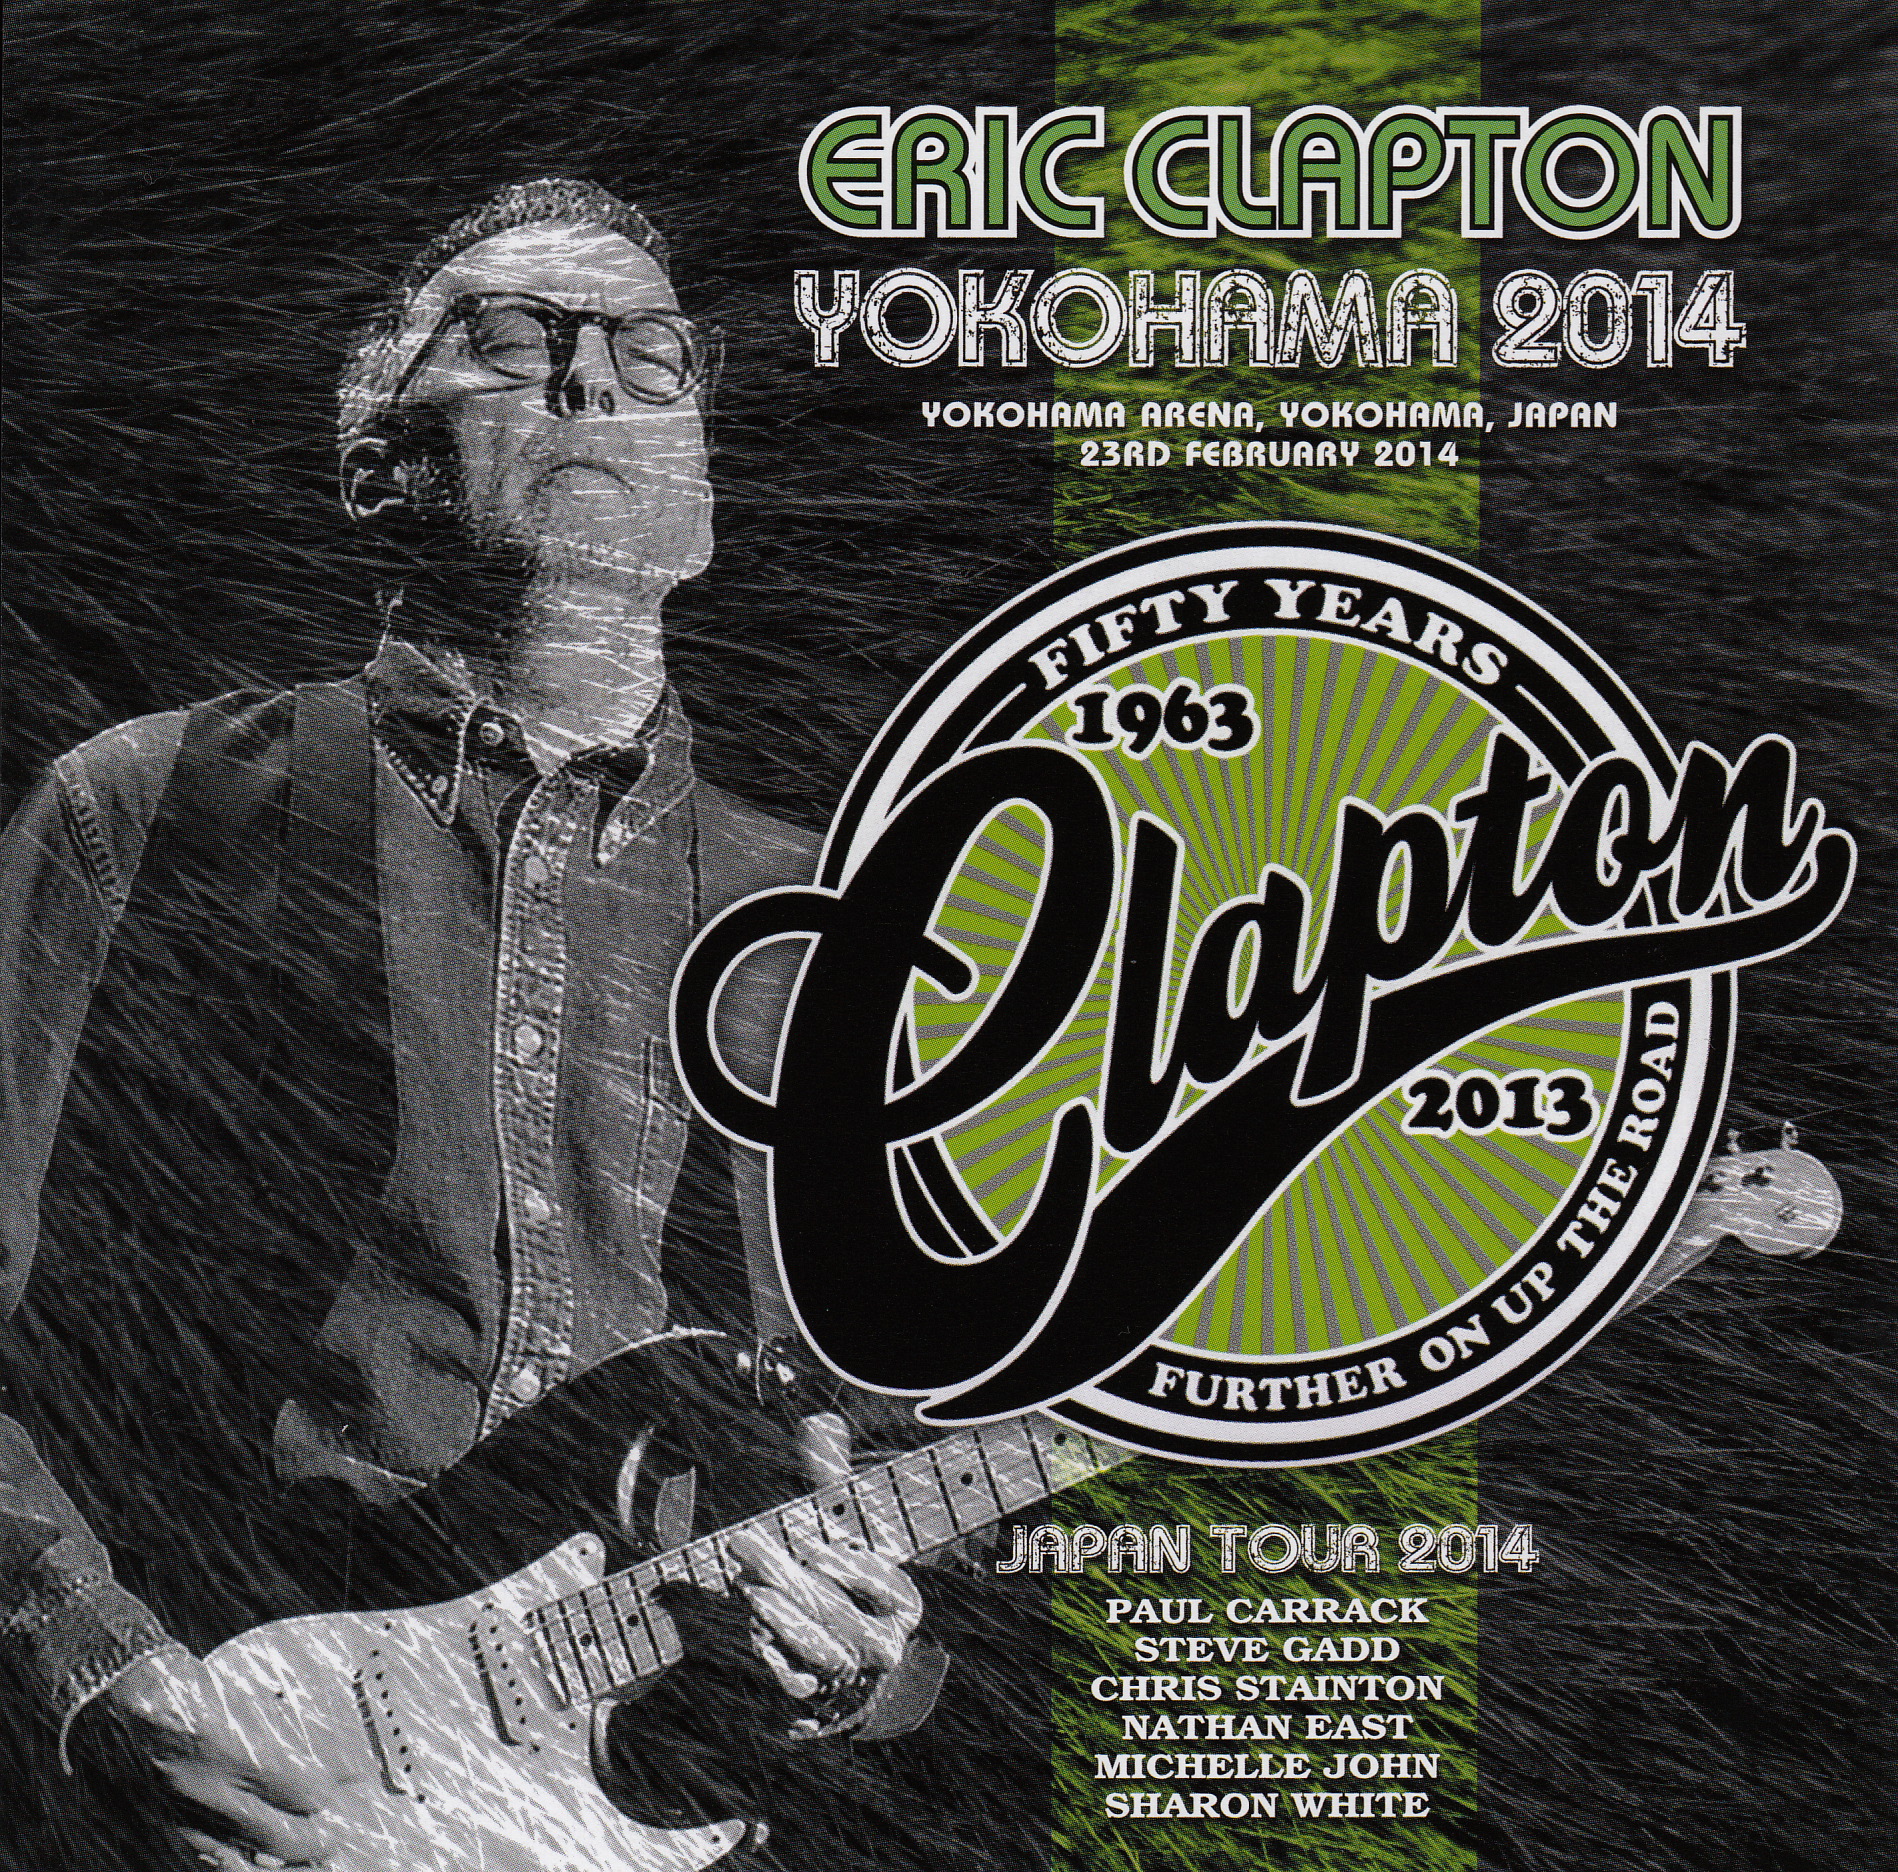 EricClapton2014-02-23YokohamaArenaJapan (1).jpg